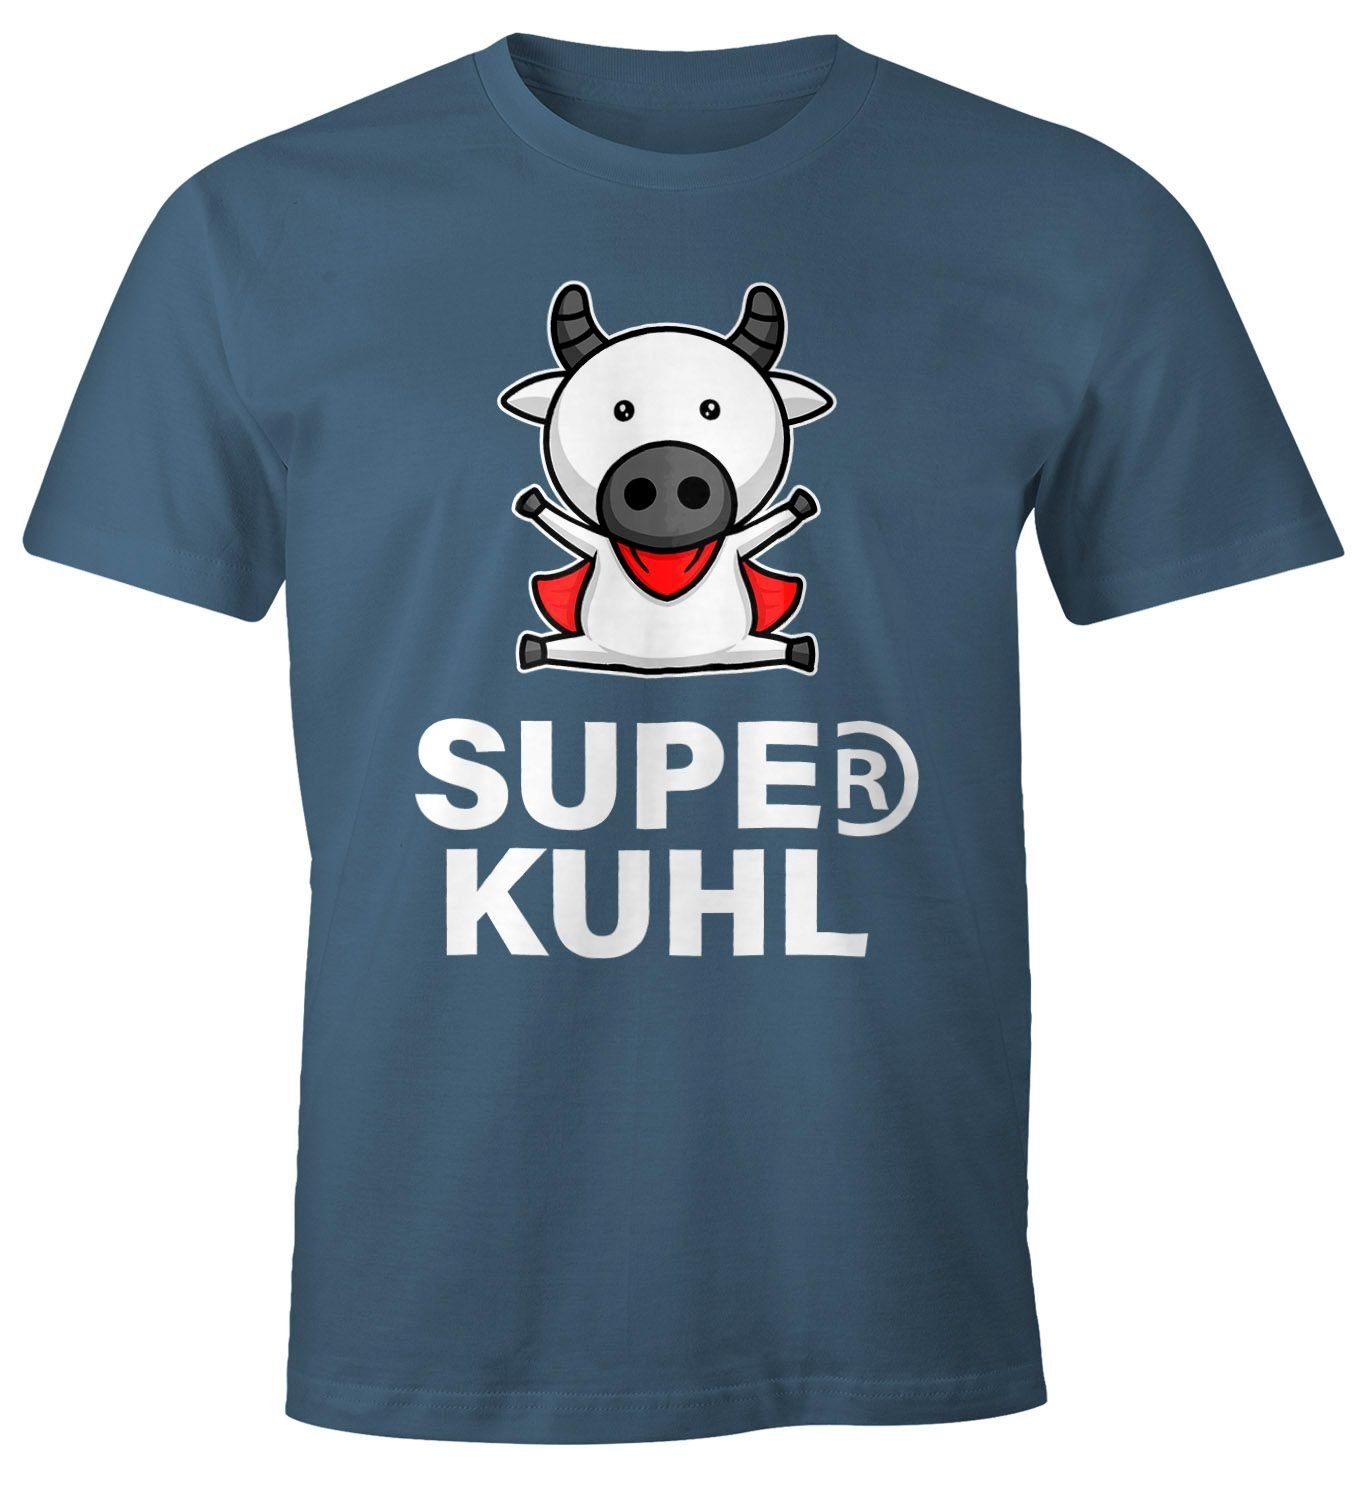 MoonWorks Print-Shirt Lustiges Herren T-Shirt Tier-Motiv Super Kuhl Kuh Fun-Shirt Moonworks® mit Print blau